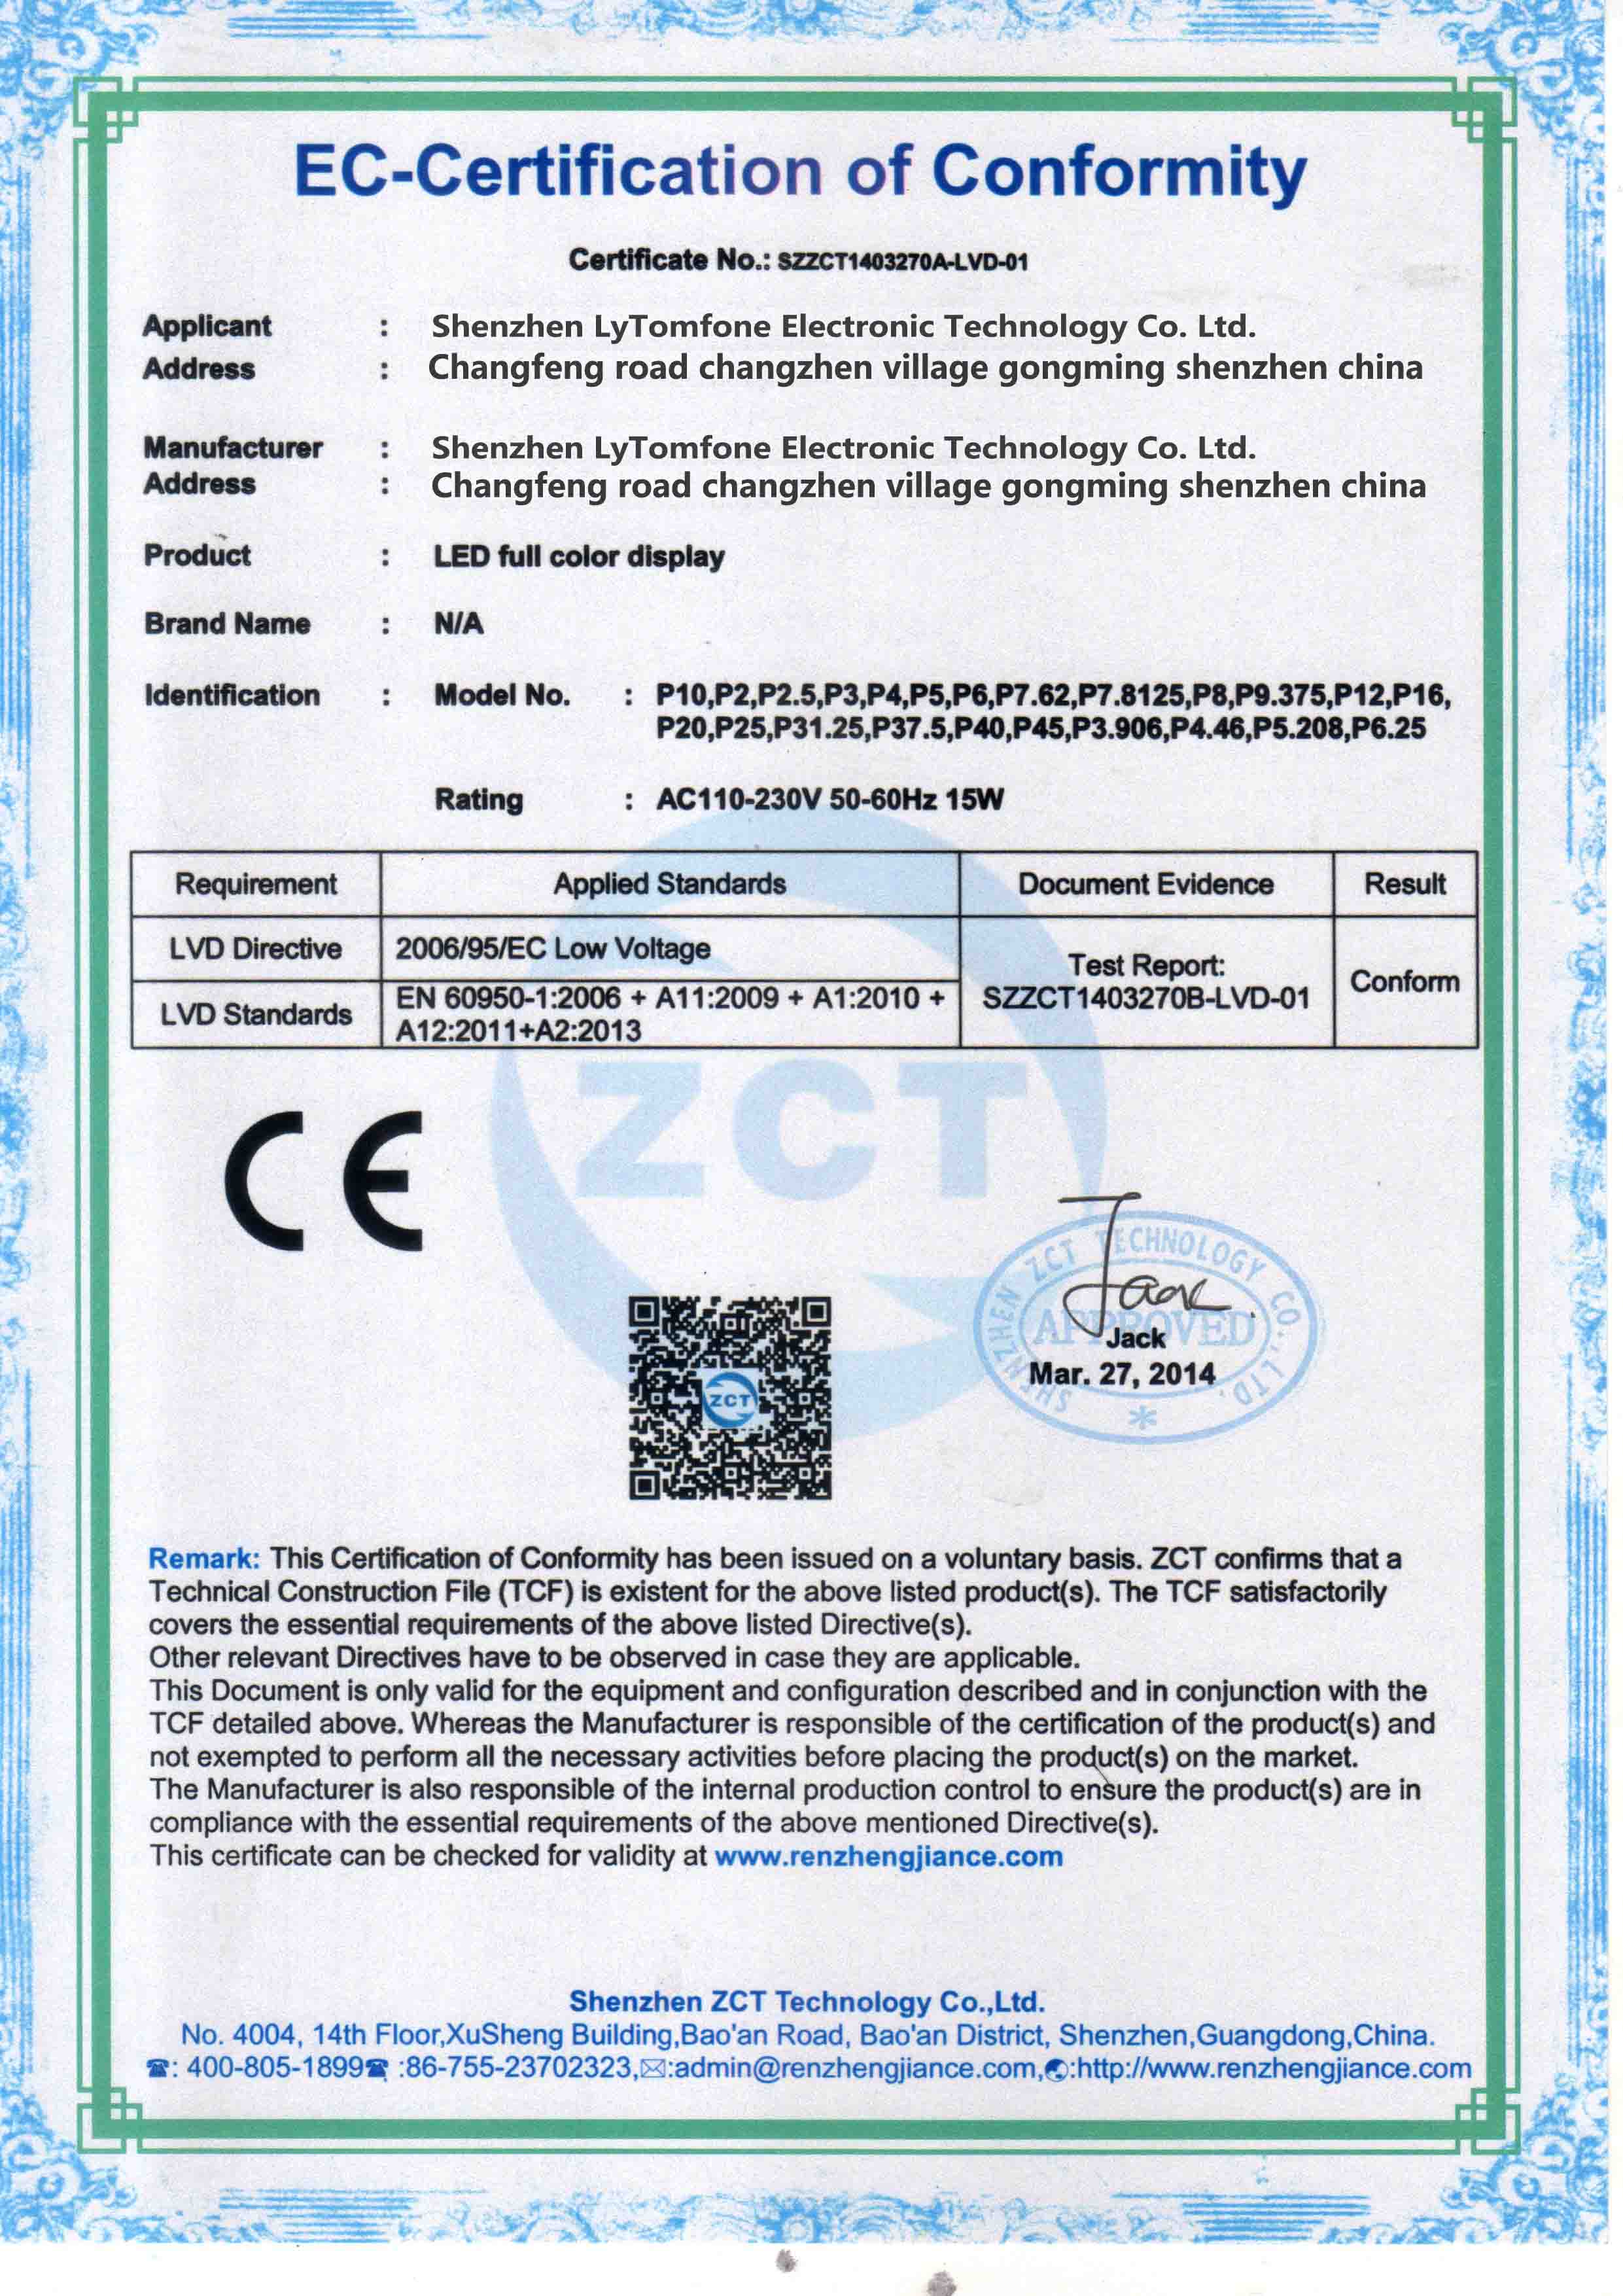 LyTomefone EC-Certification